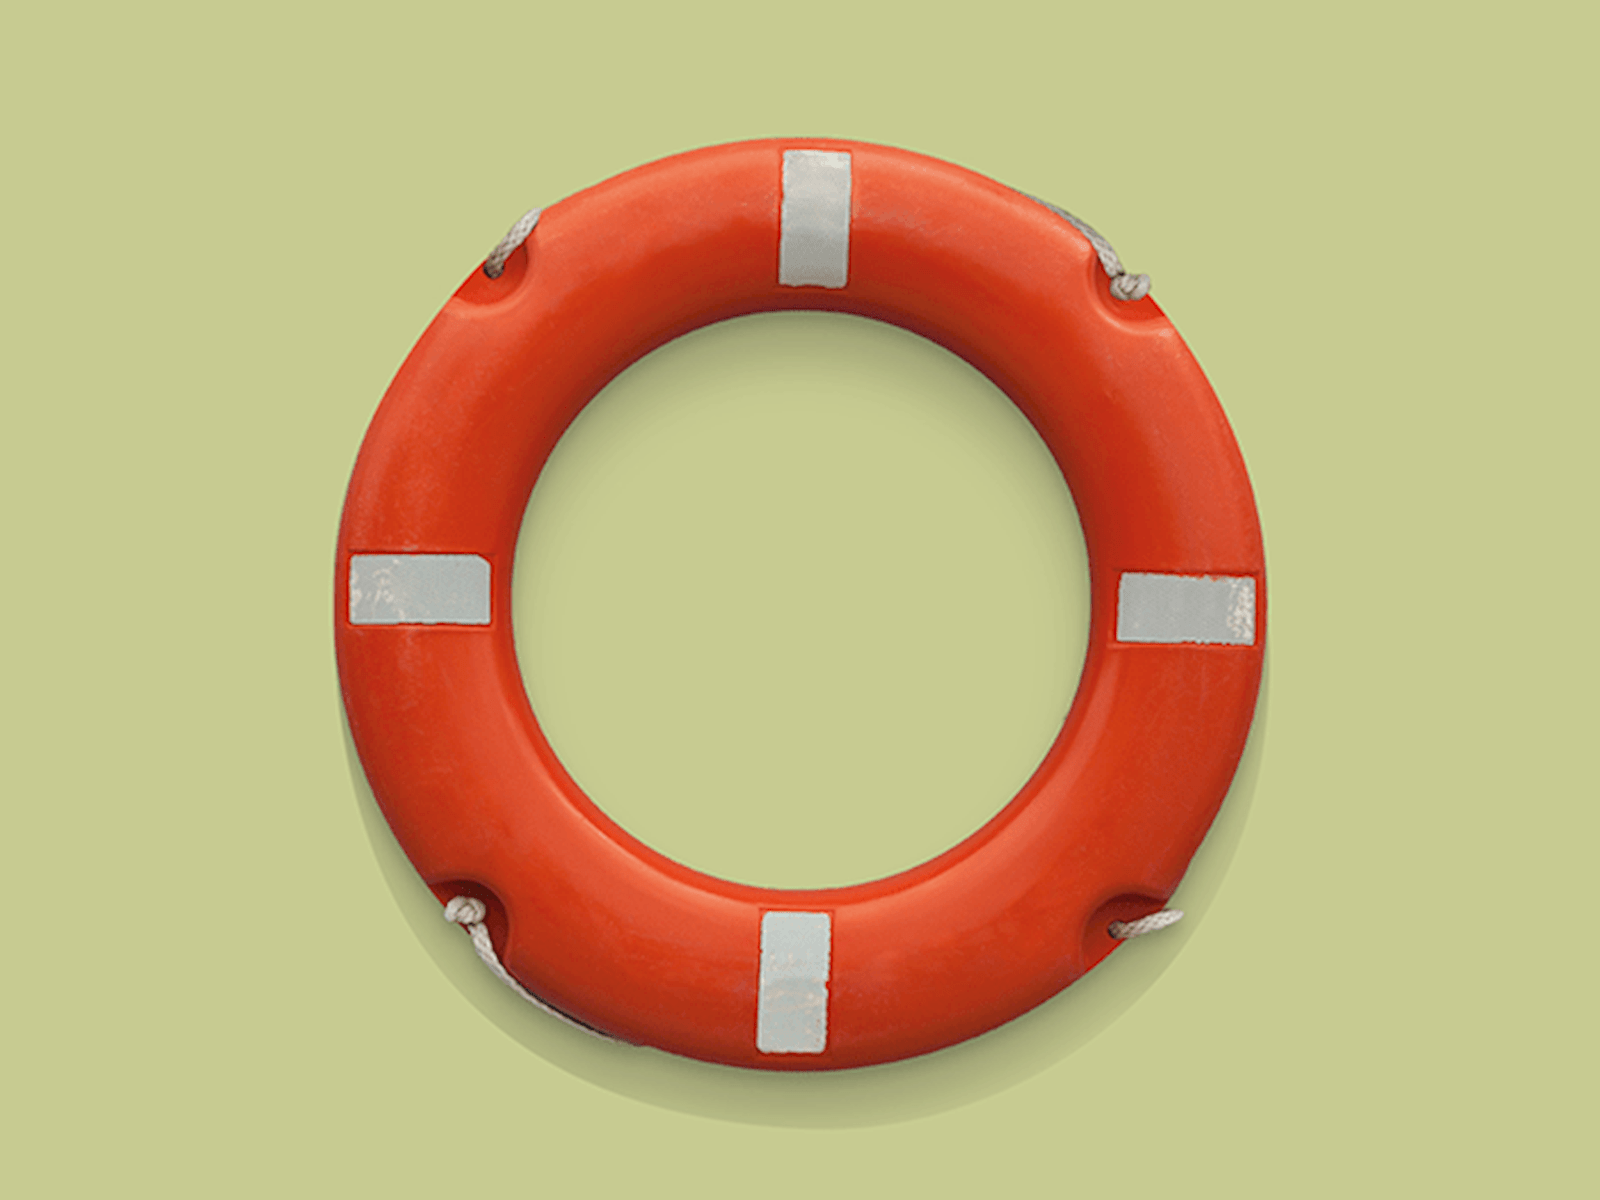 A life buoy